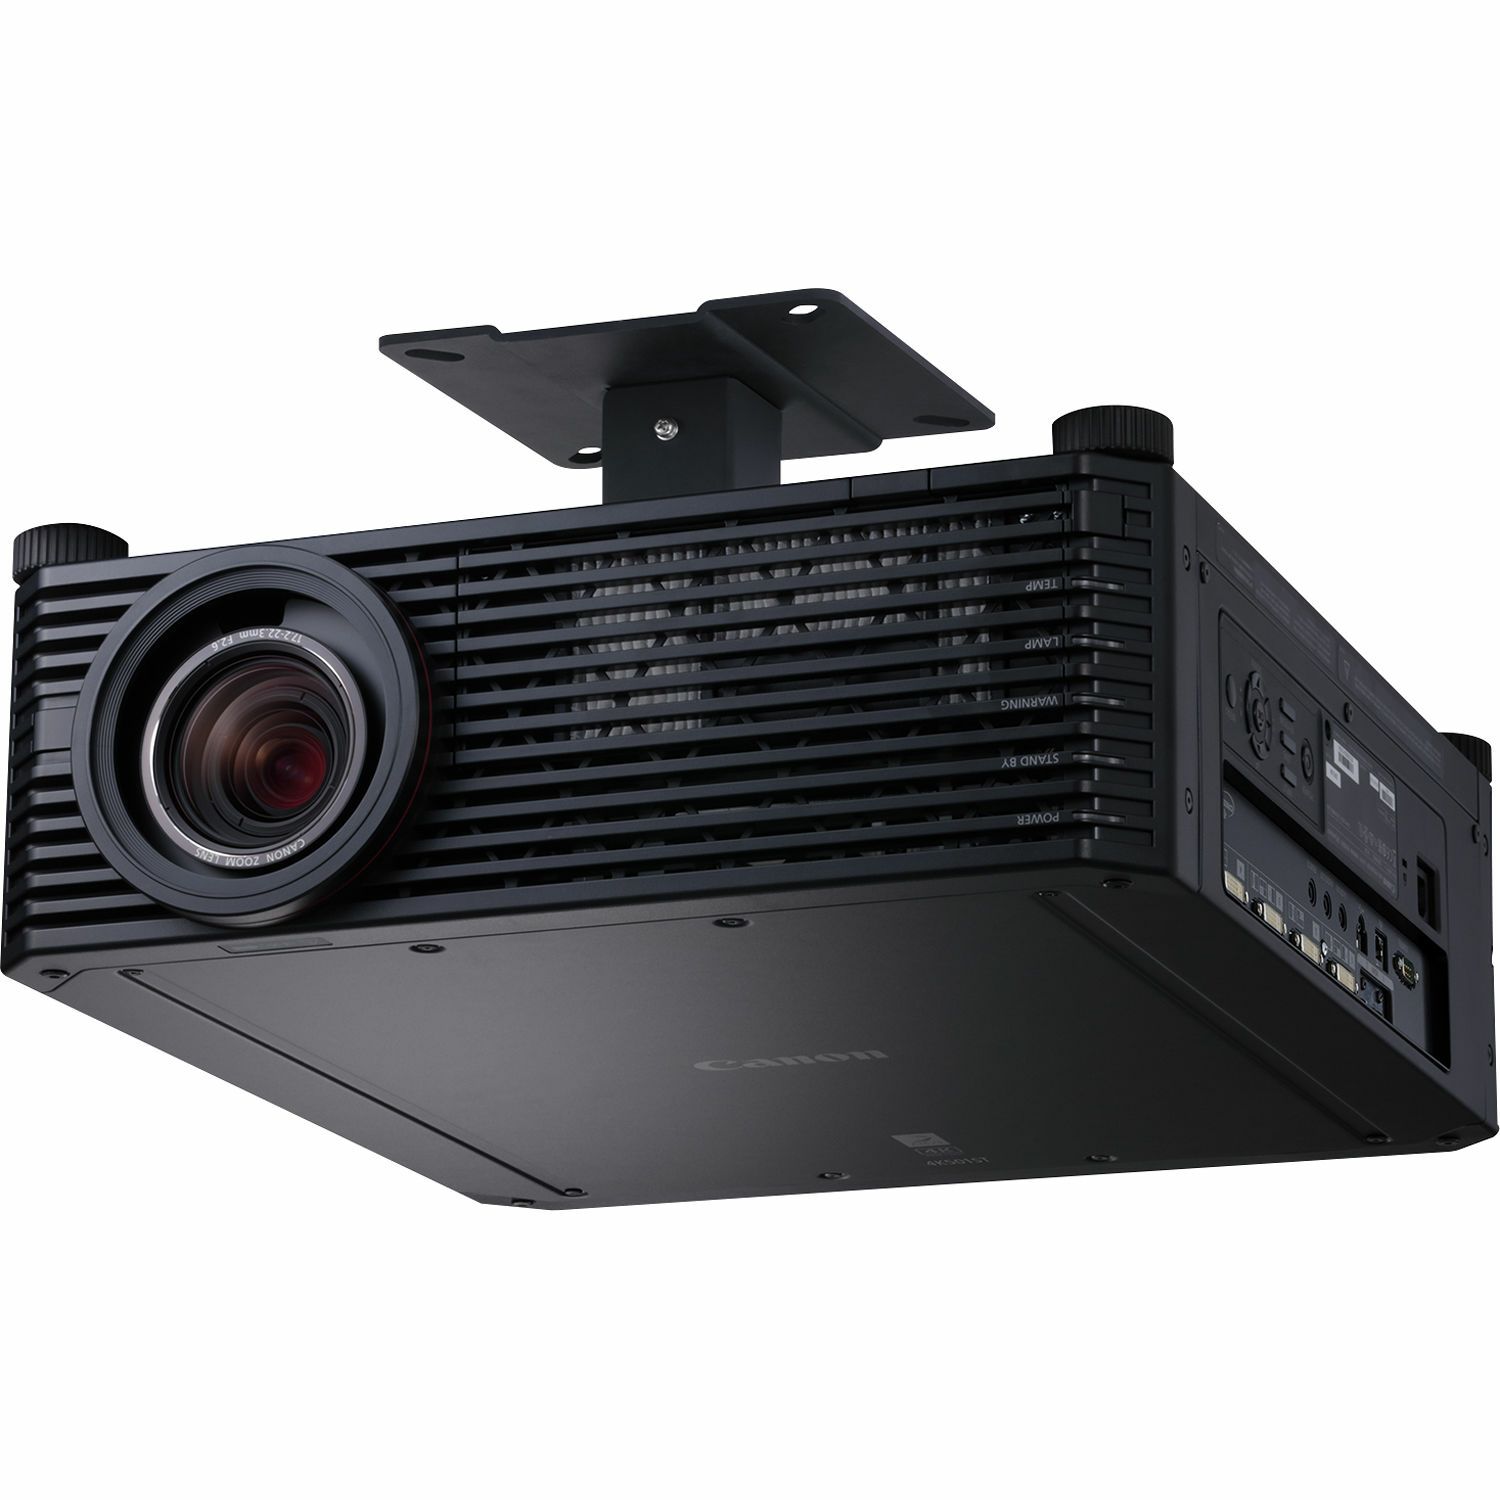 Canon XEED 4K501ST 4K projektor dizajniran za simulacije, vizualizacije, studije za dizajn i medicinska okruženja